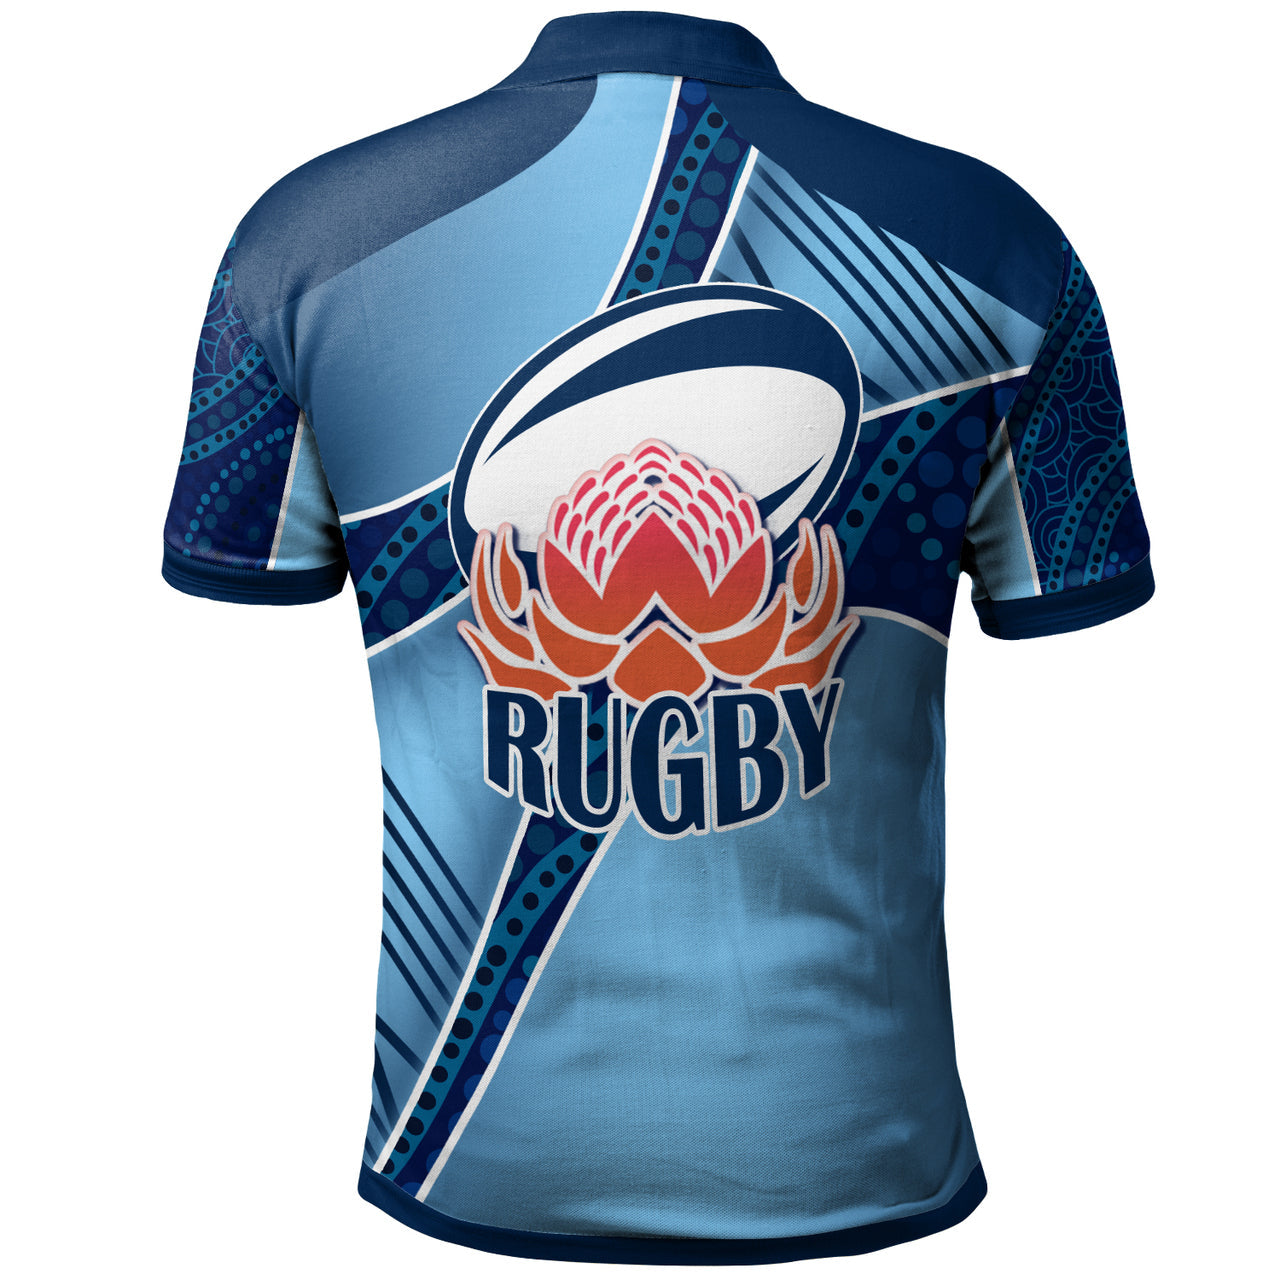 waratahs-rugby-polo-shirt-custom-rugby-ball-logo-polo-shirt